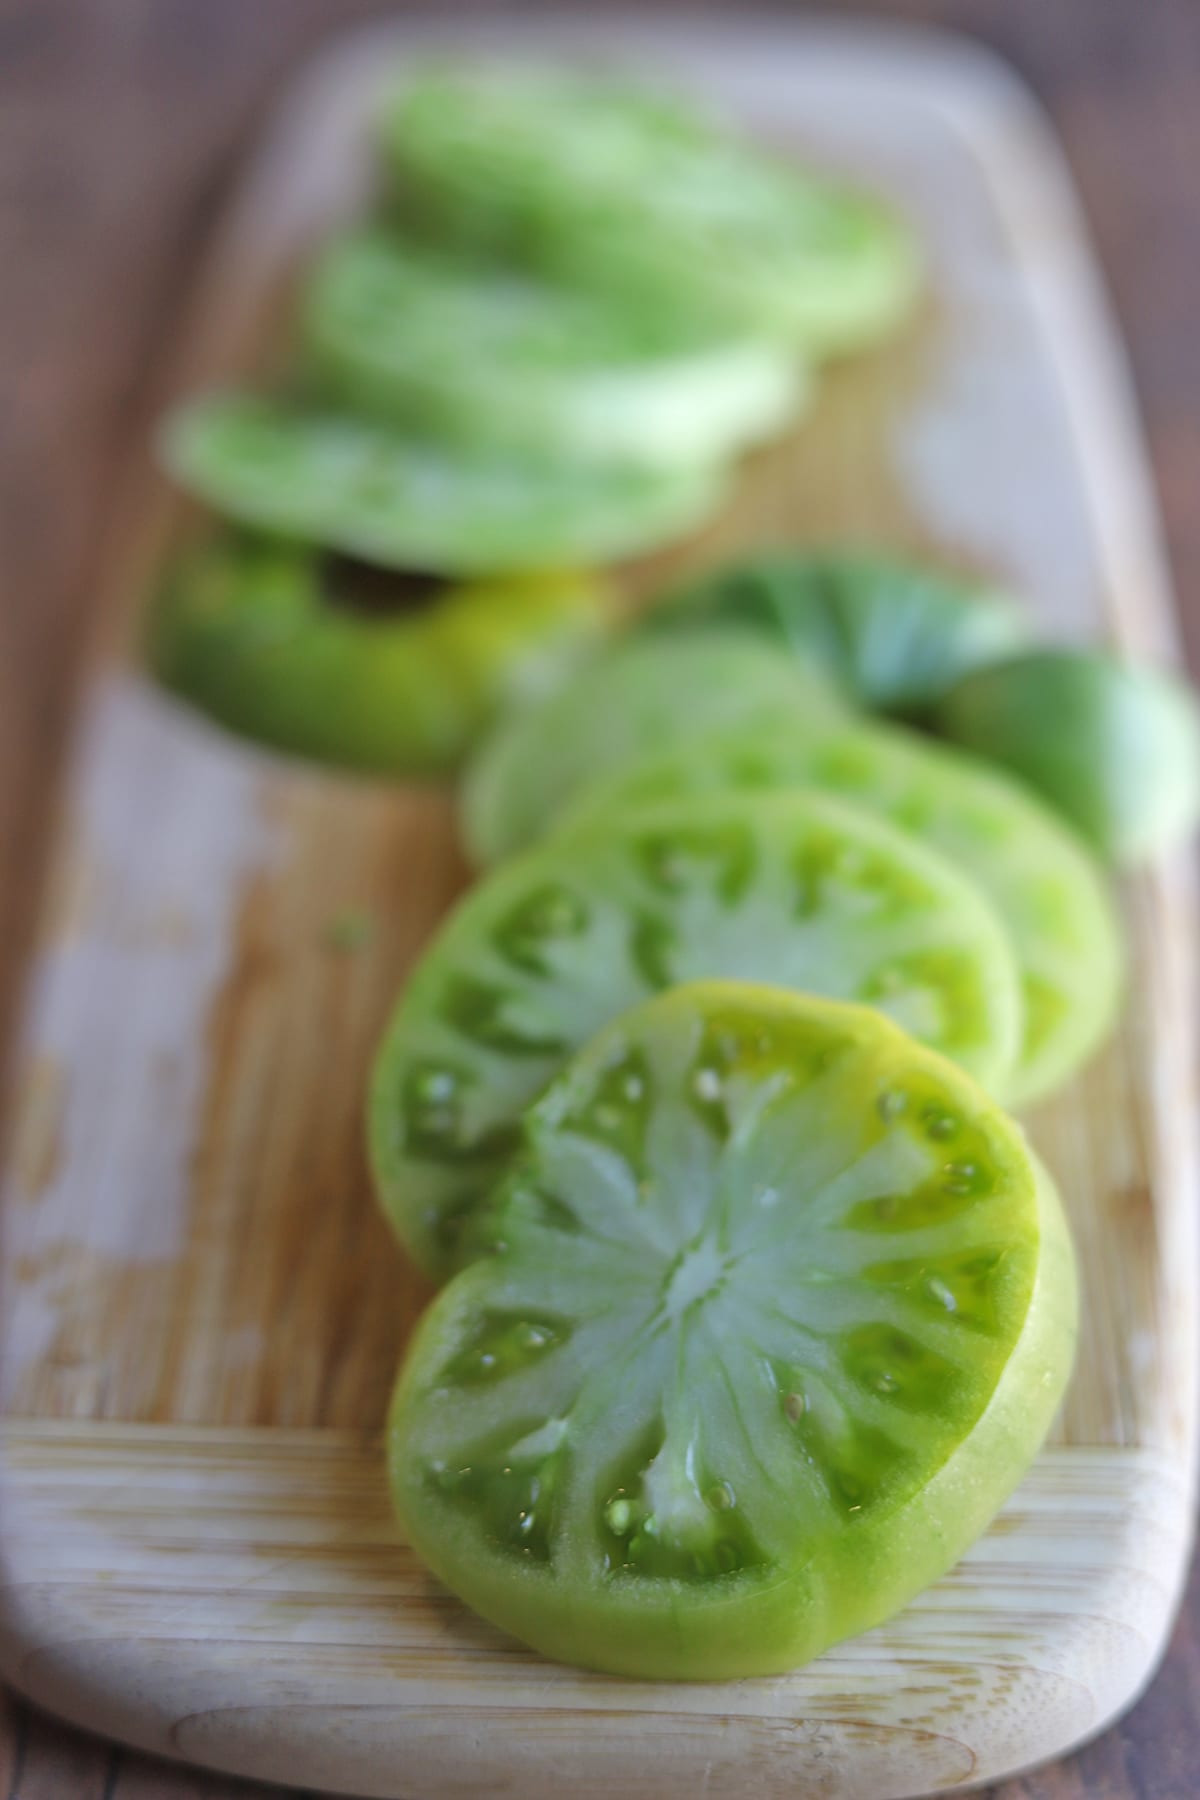 Sliced green tomato on cutting board.